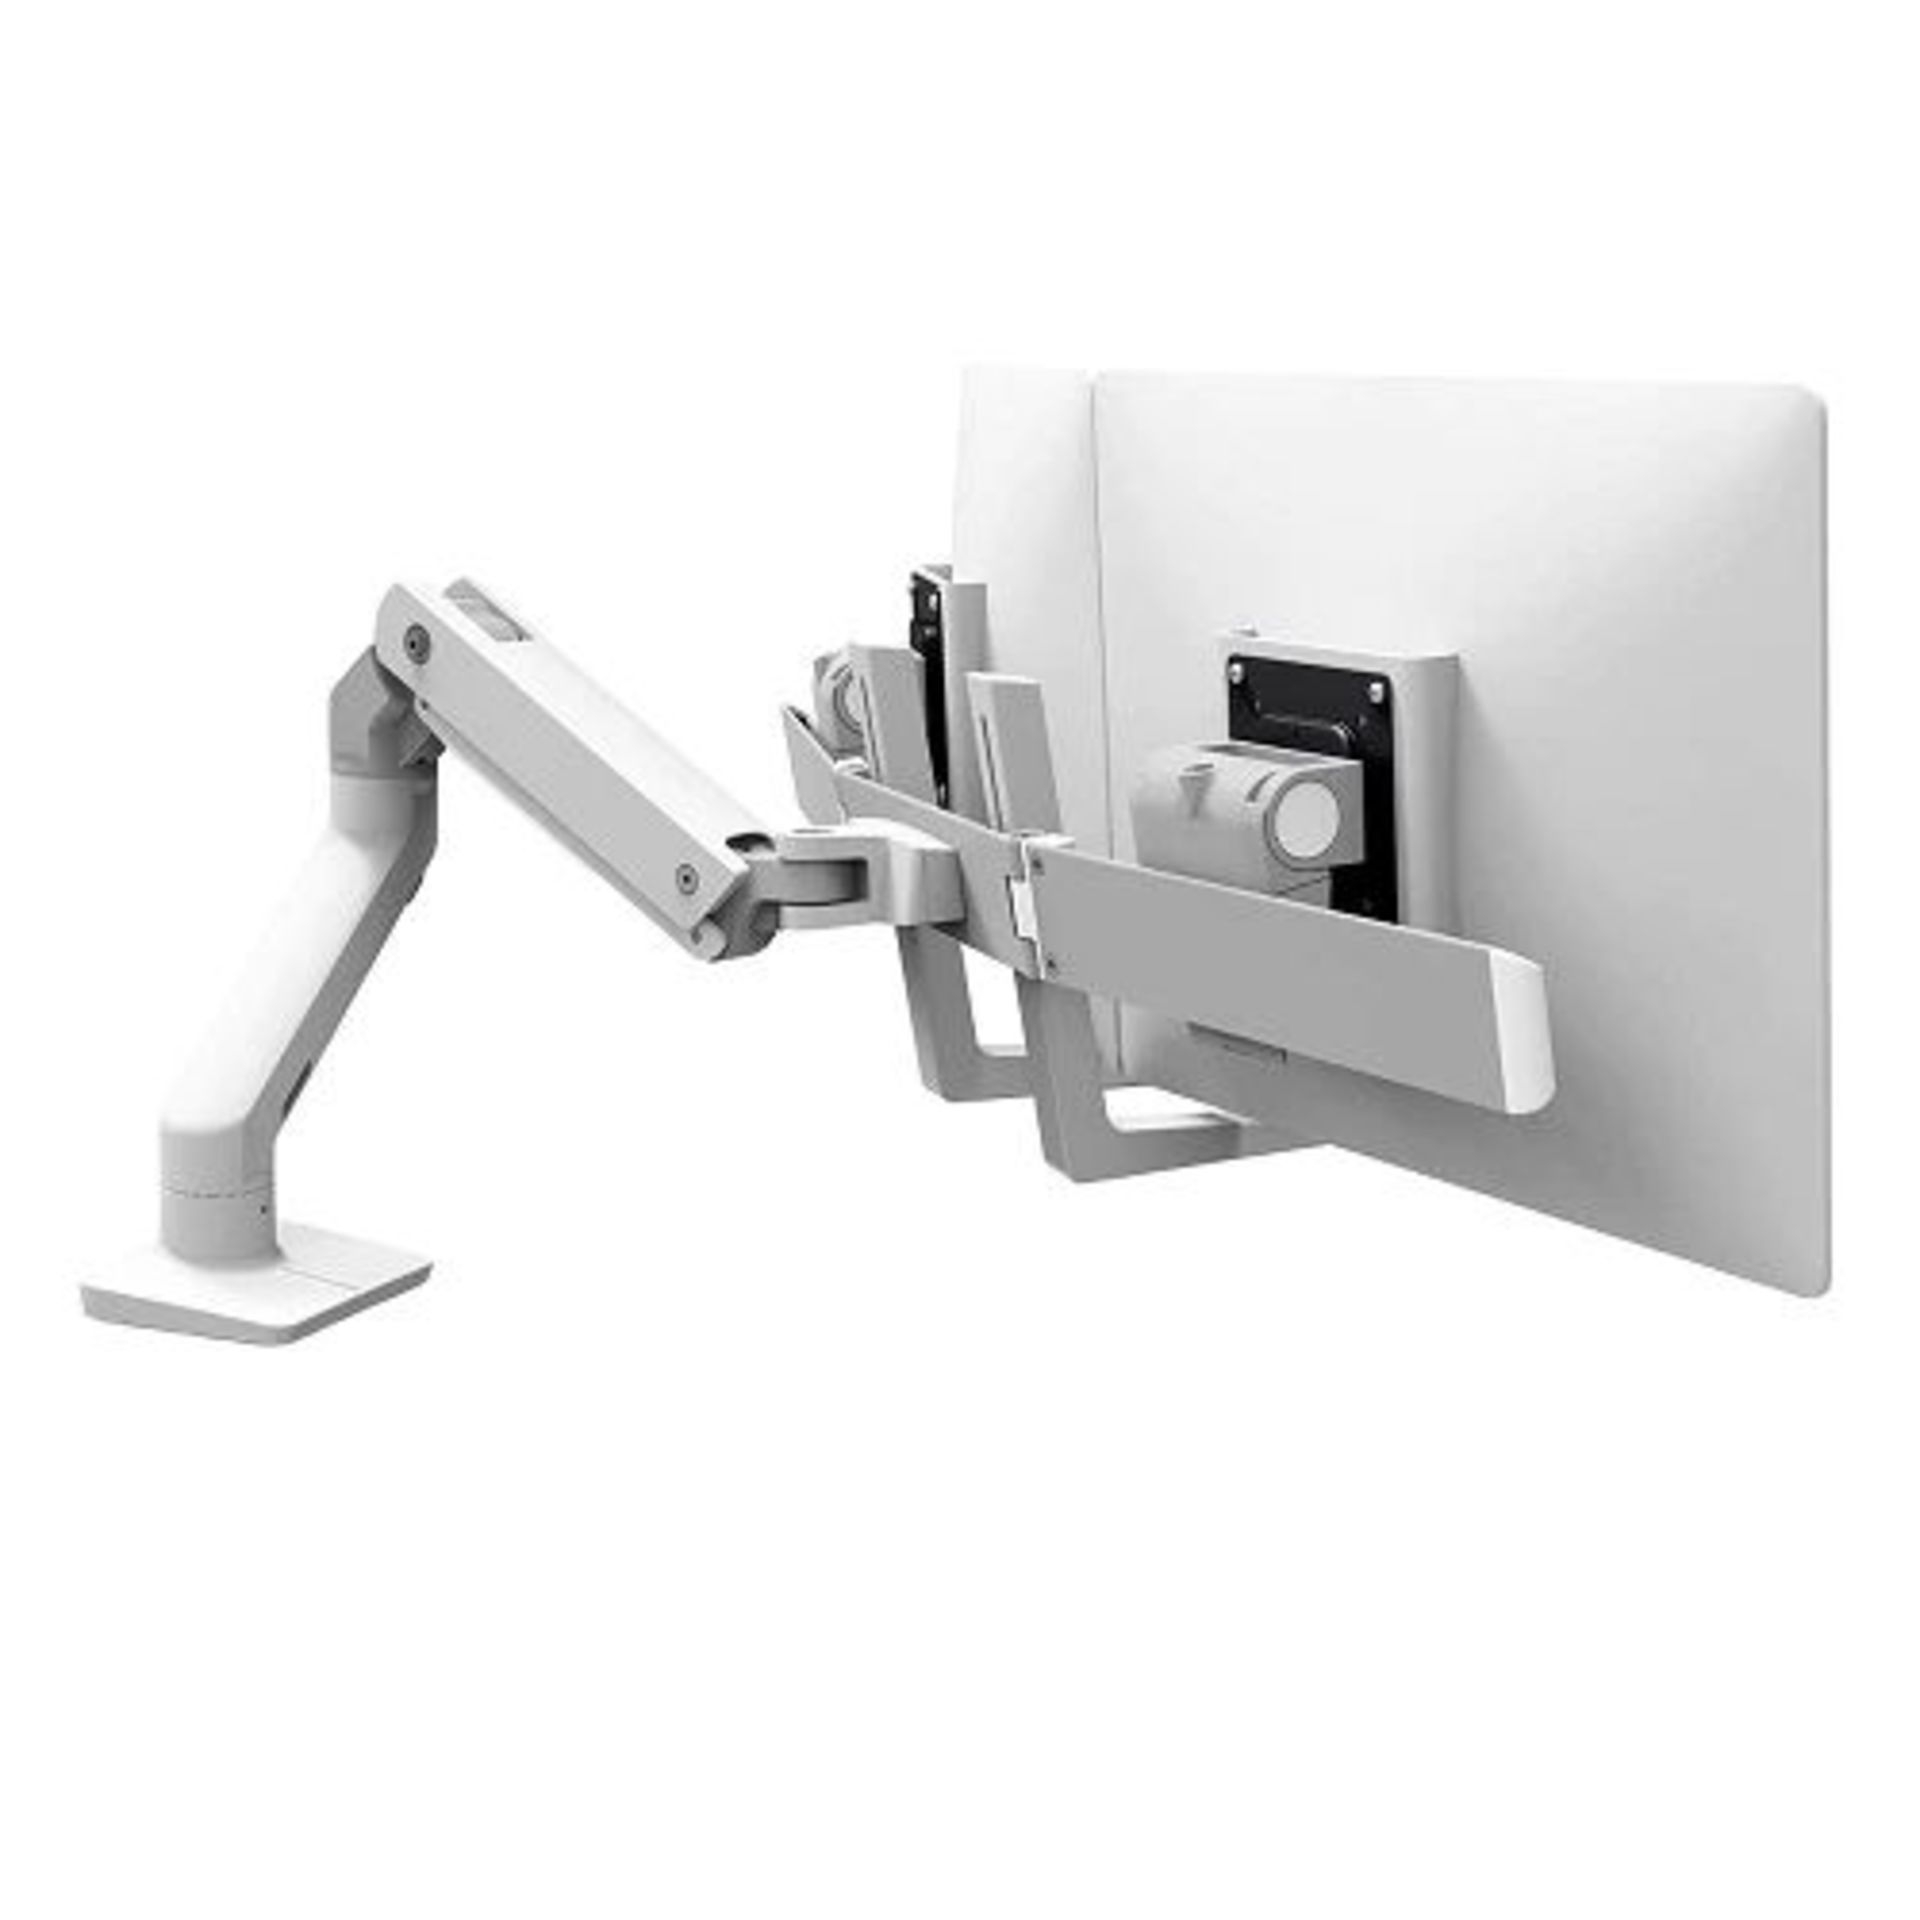 Ergotron HX Desk Dual Monitor Arm. - RRP £419.99. - ER21. Choose a monitor arm that’s as adaptable